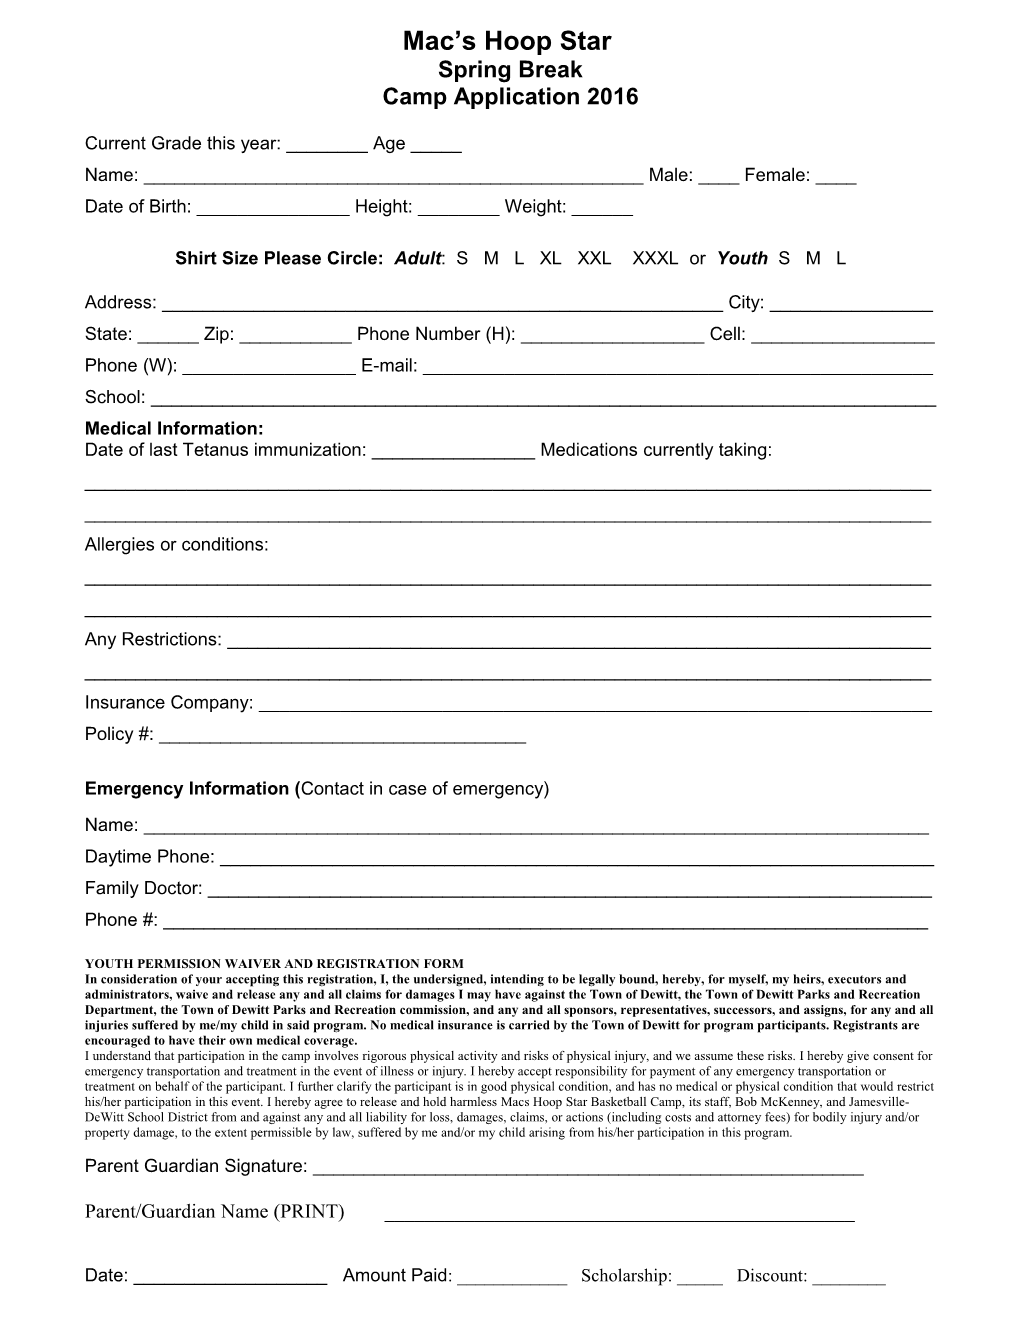 Mac S Hoopstar 2006 Camp Application